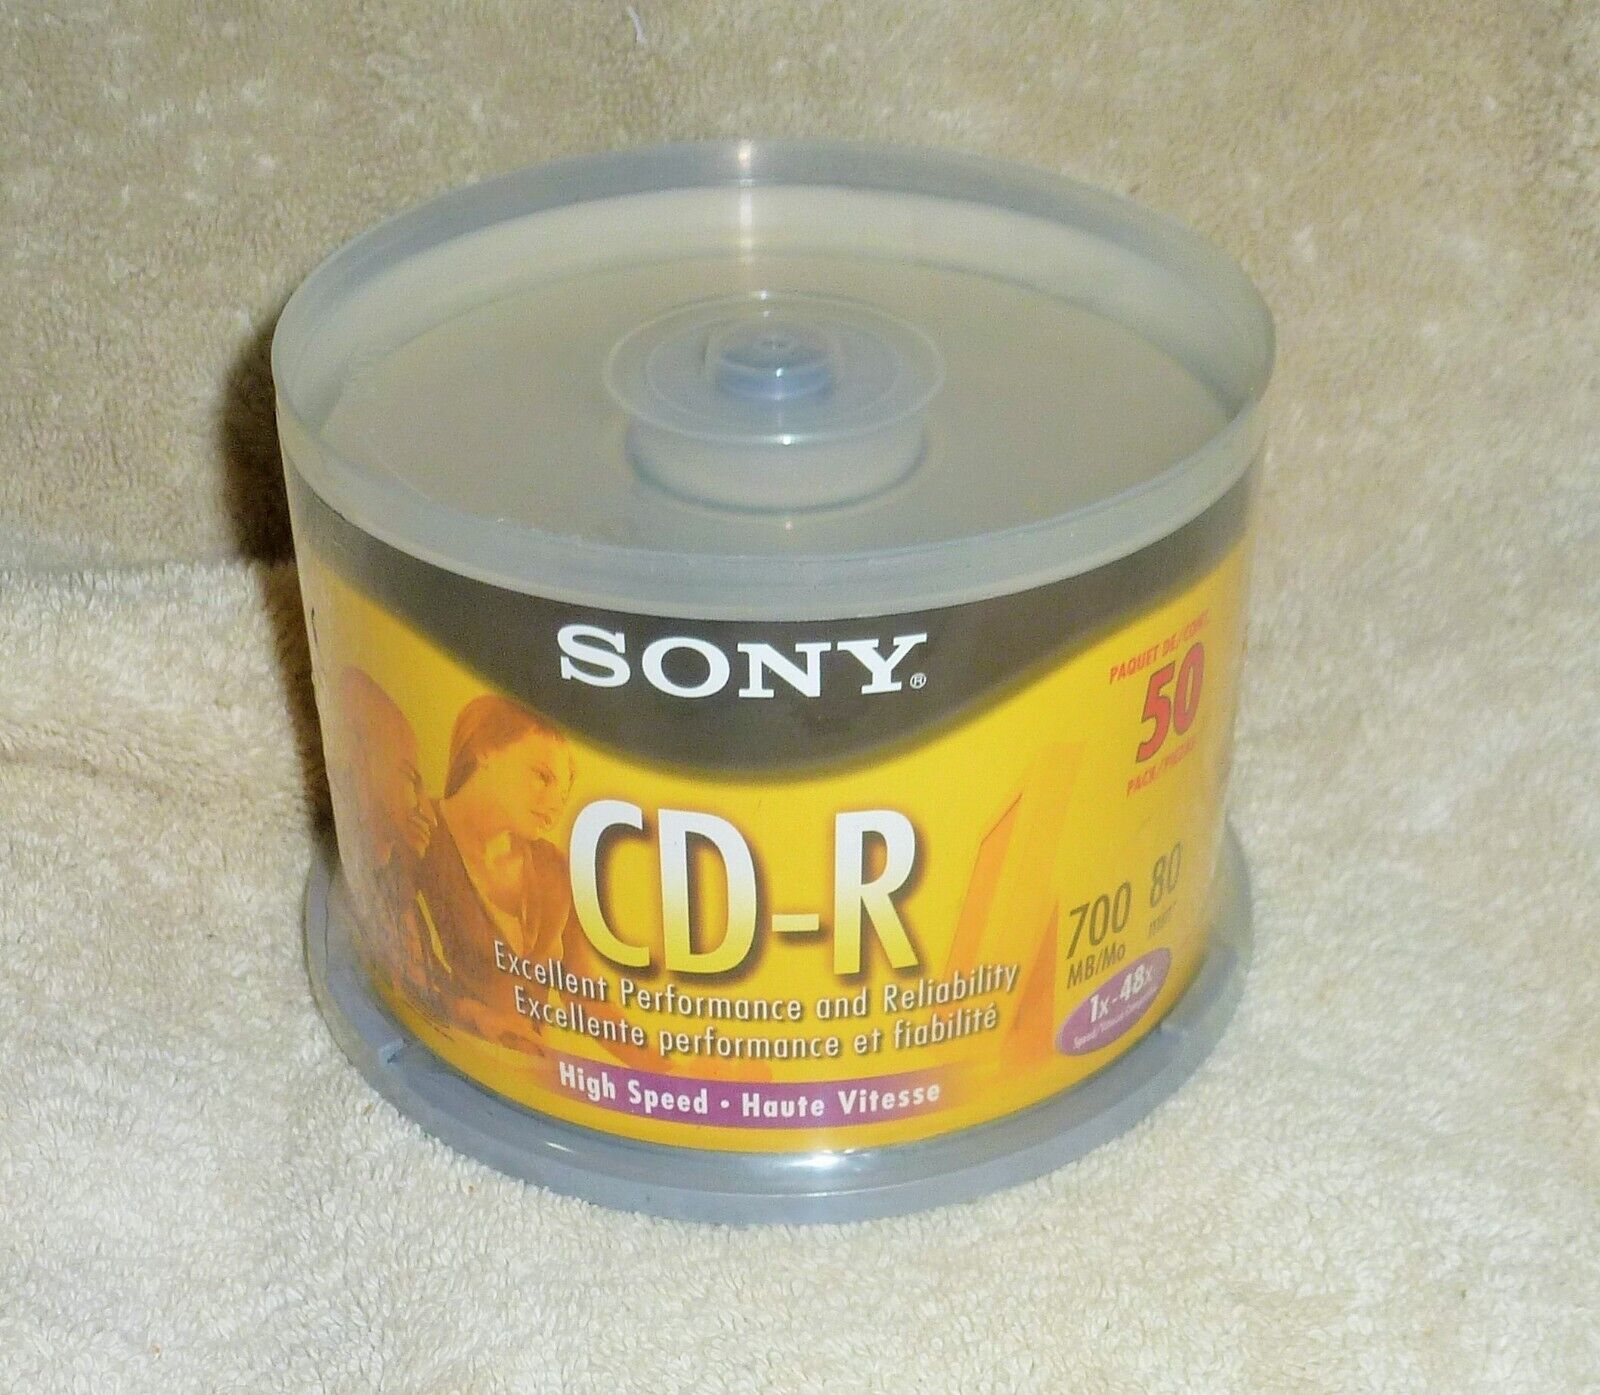 Sony CD-R 700MB 50 Pack 80 min Storage Media Discs